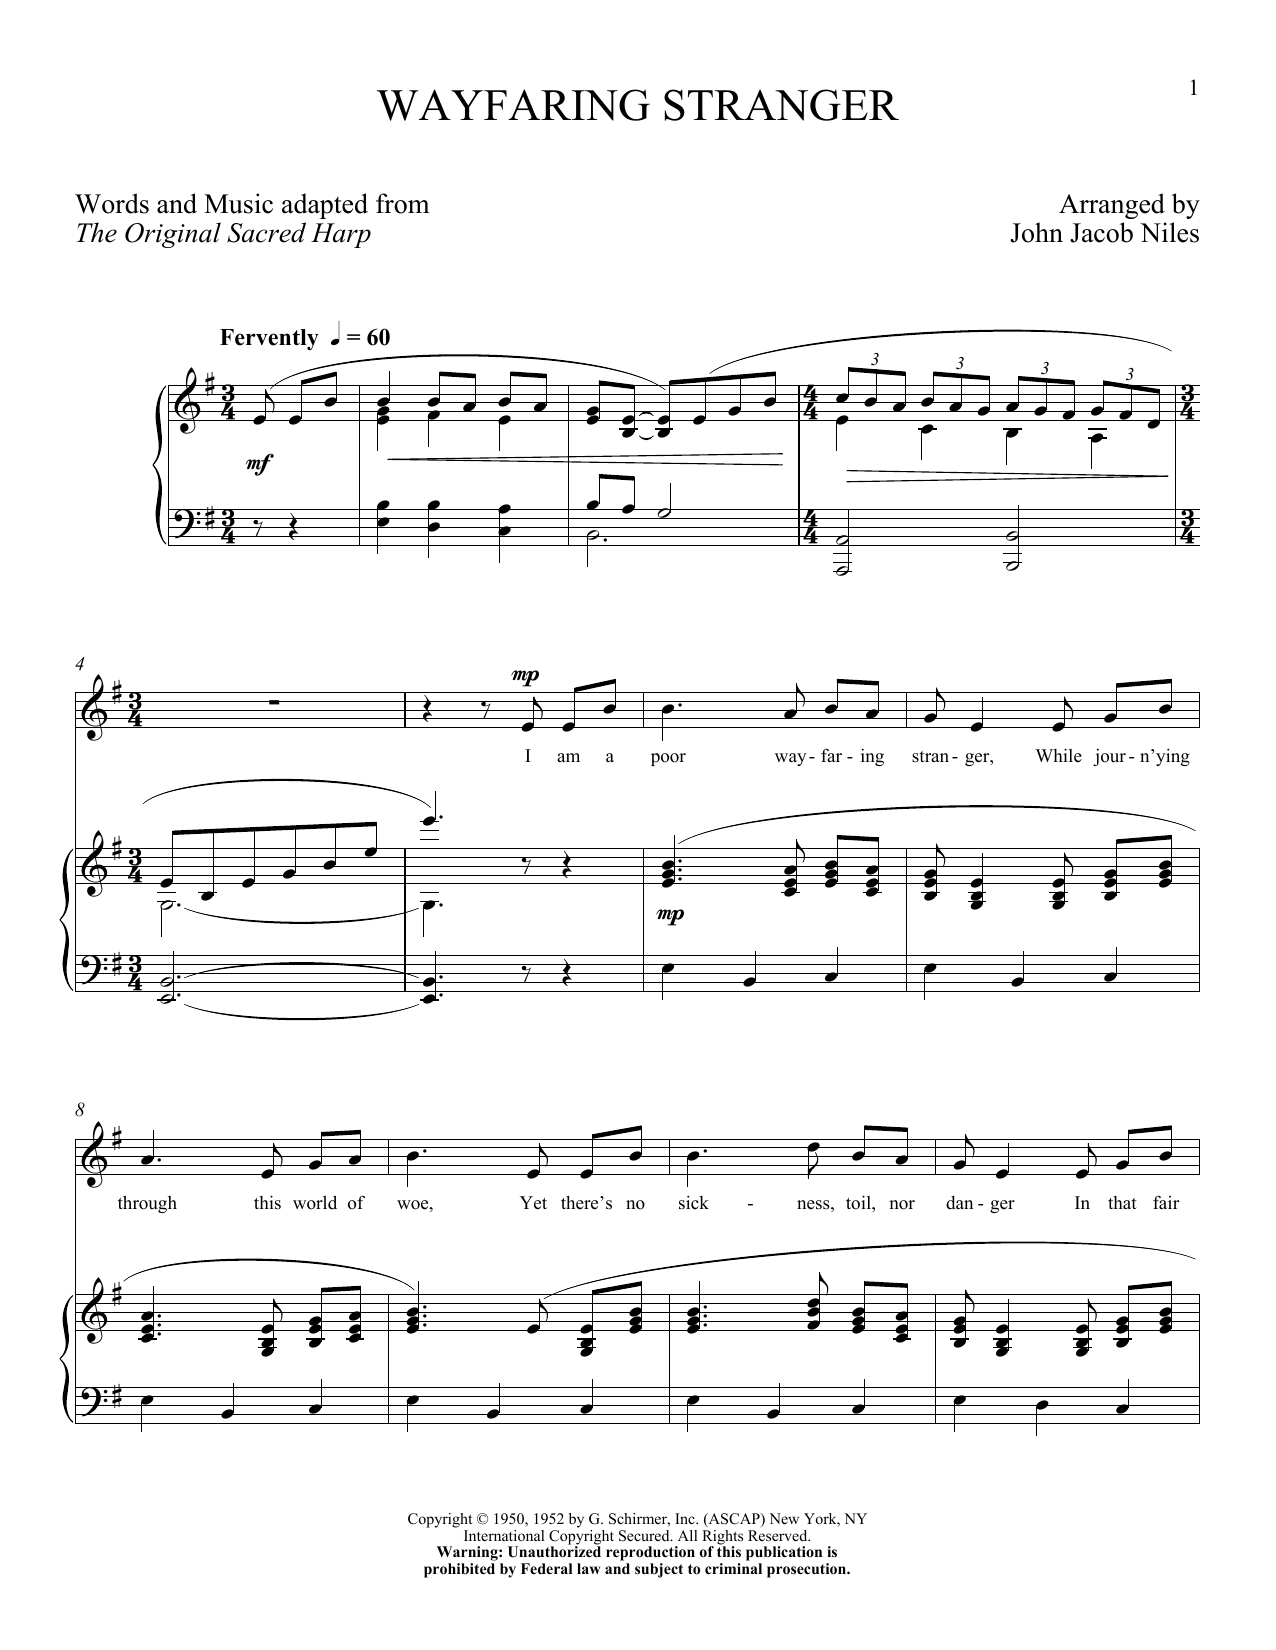 John Jacob Niles Wayfaring Stranger Sheet Music Notes & Chords for Piano & Vocal - Download or Print PDF